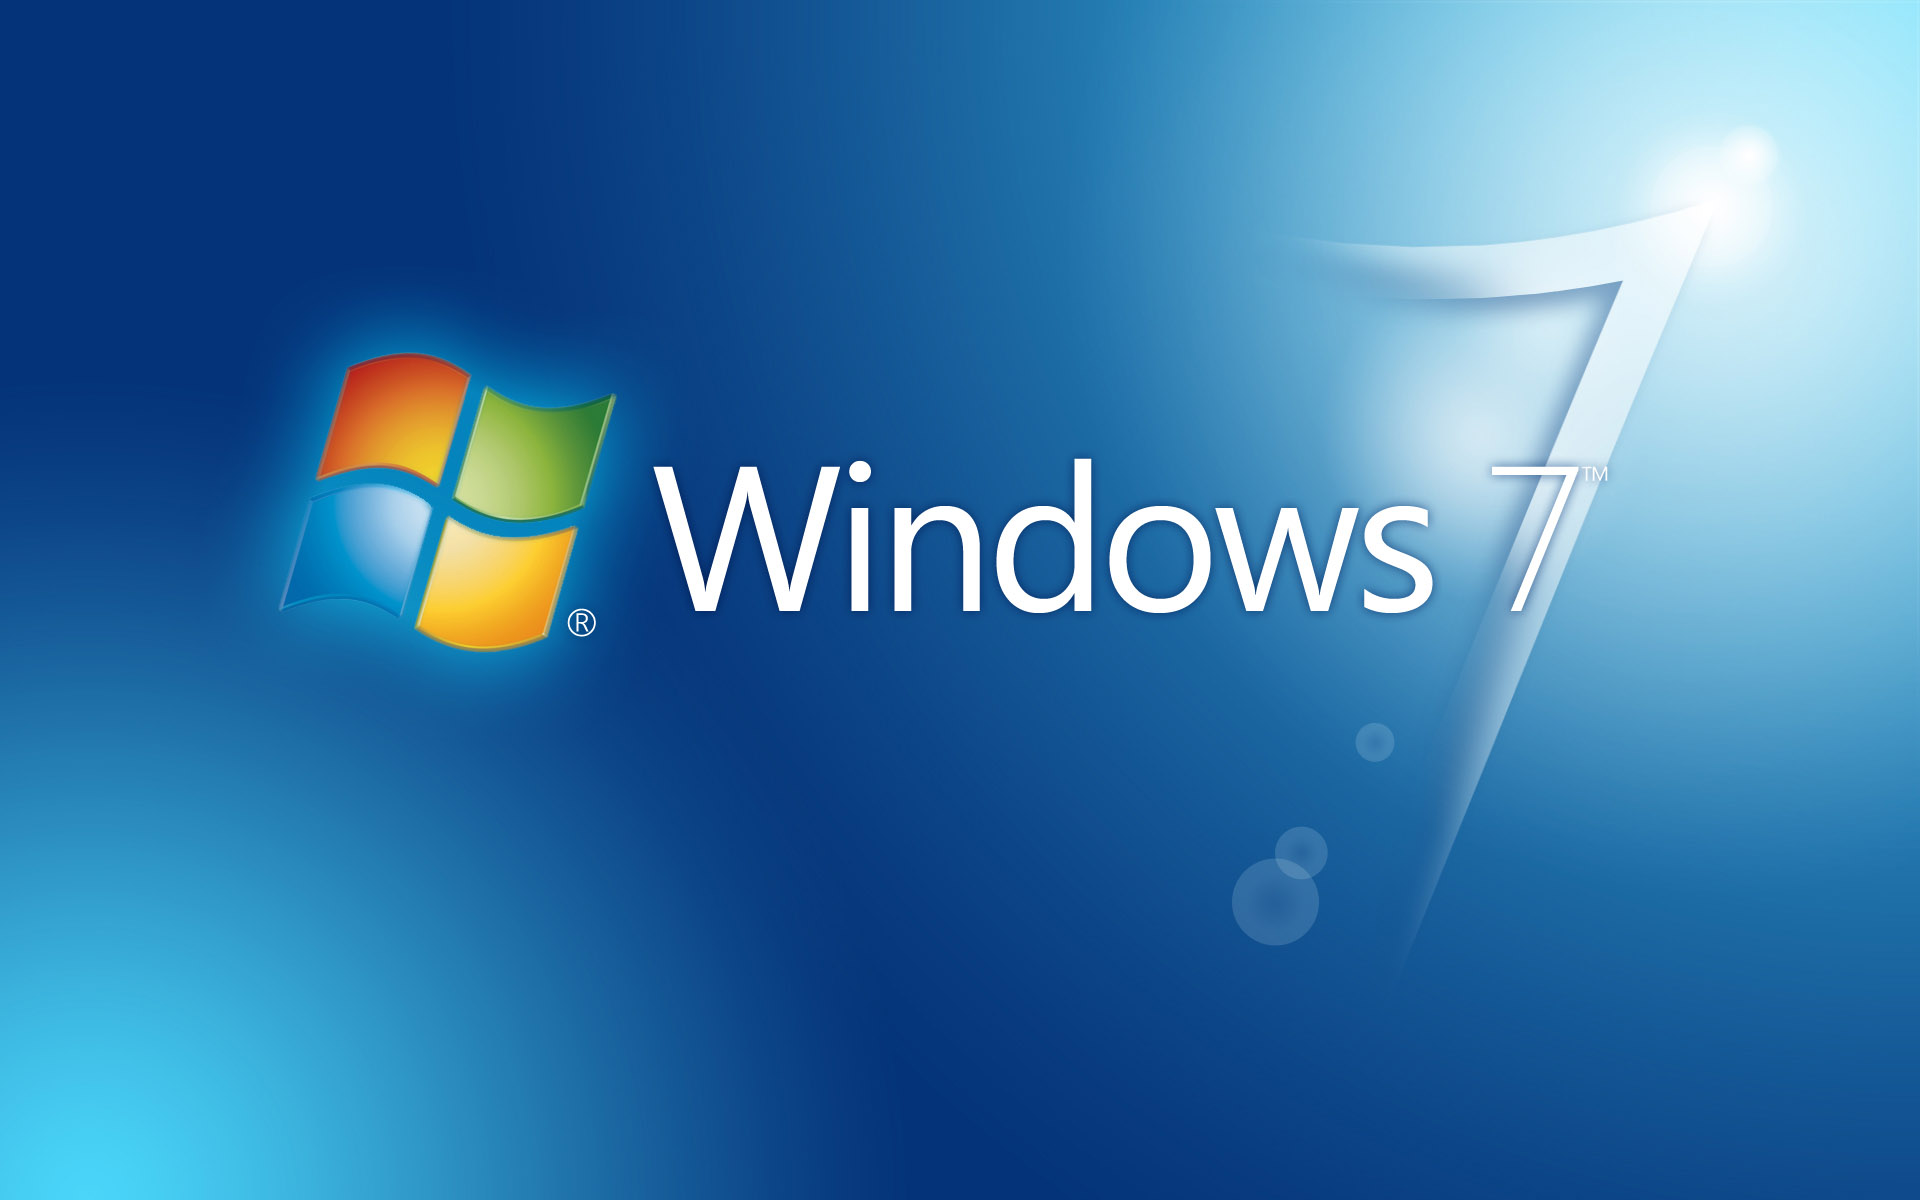 Windows 7 Backgrounds